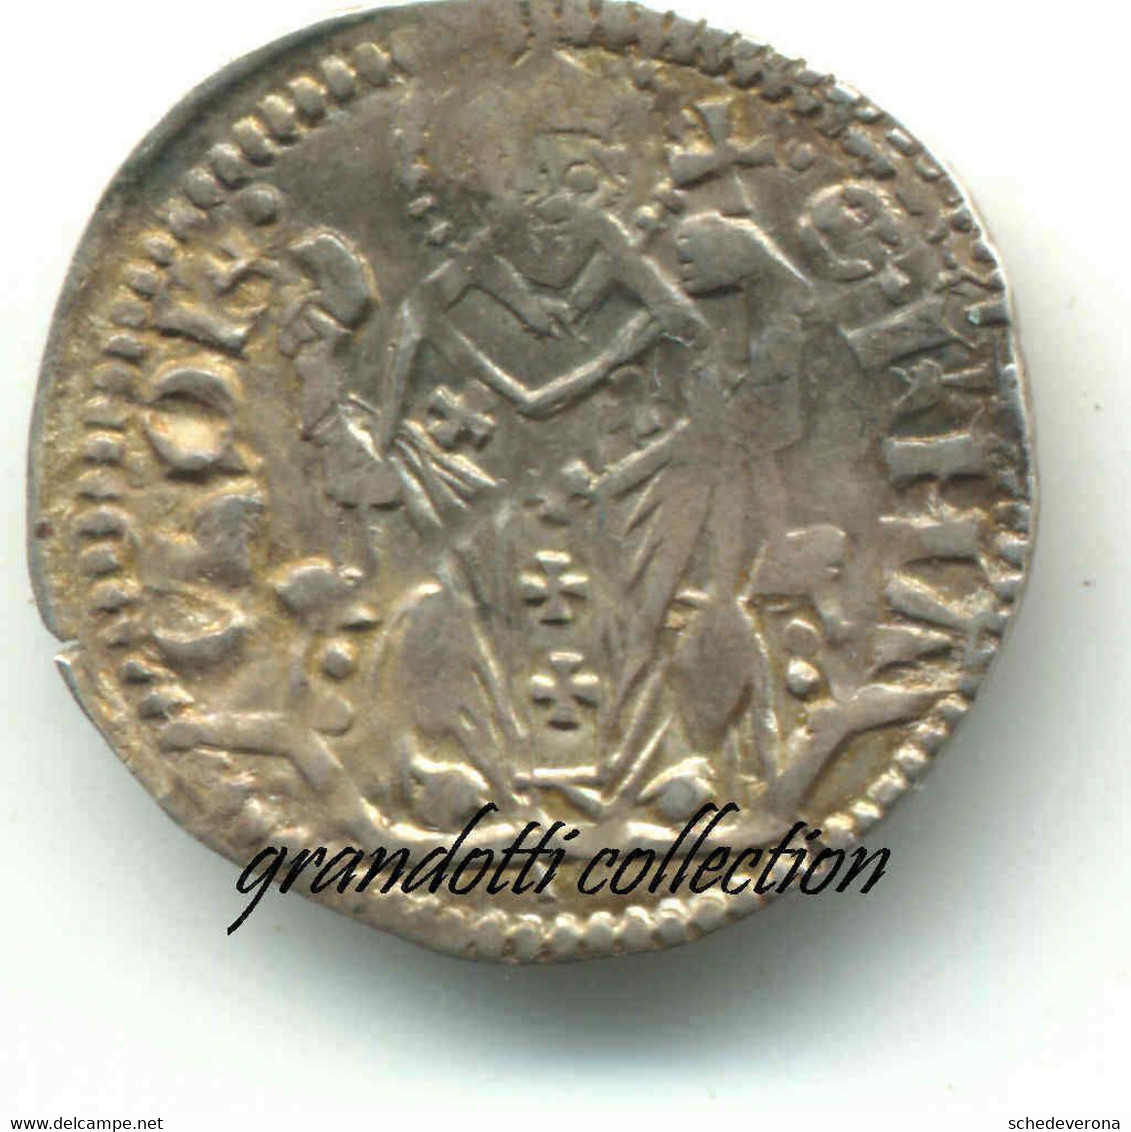 AQUILEIA PATRIARCATO BERTANDO SAN GENESIO DENARO 1334 - 1350 MONETA MEDIEVALE - Feudal Coins